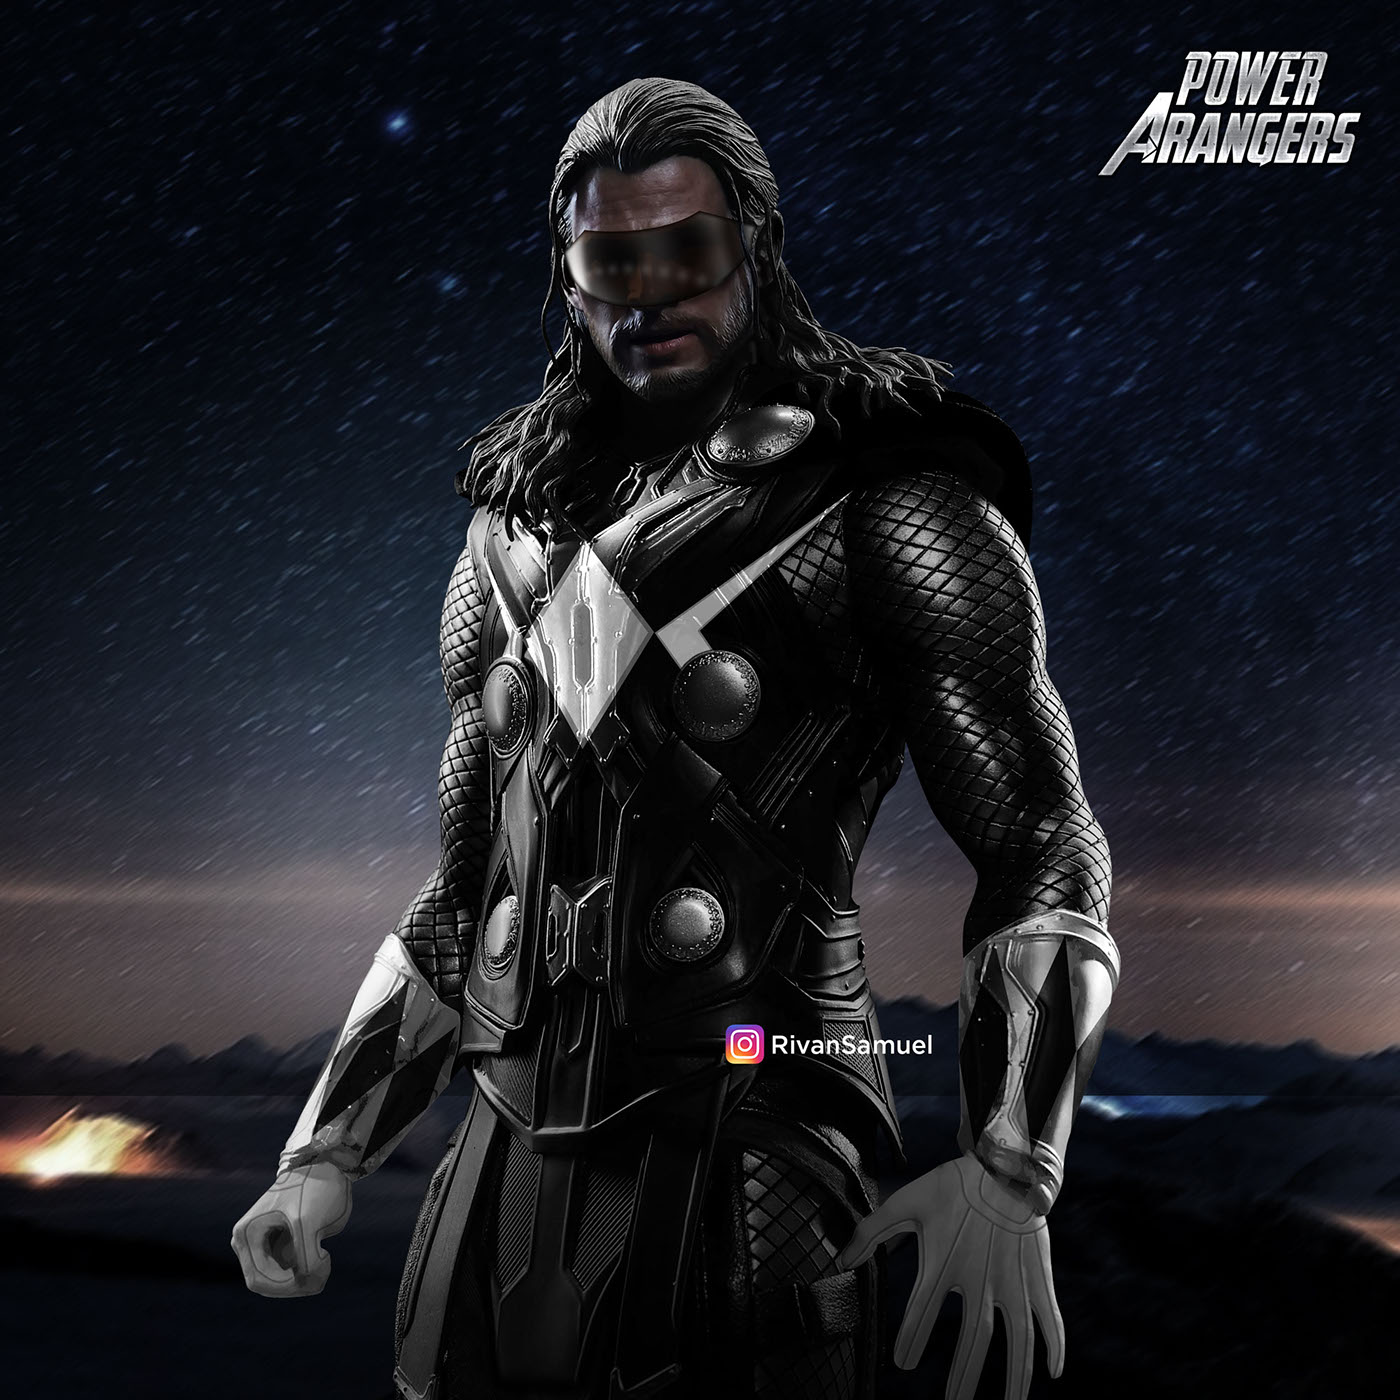 Power Rangers Avengers marvel saban Thor iron man captain america Hulk black widow